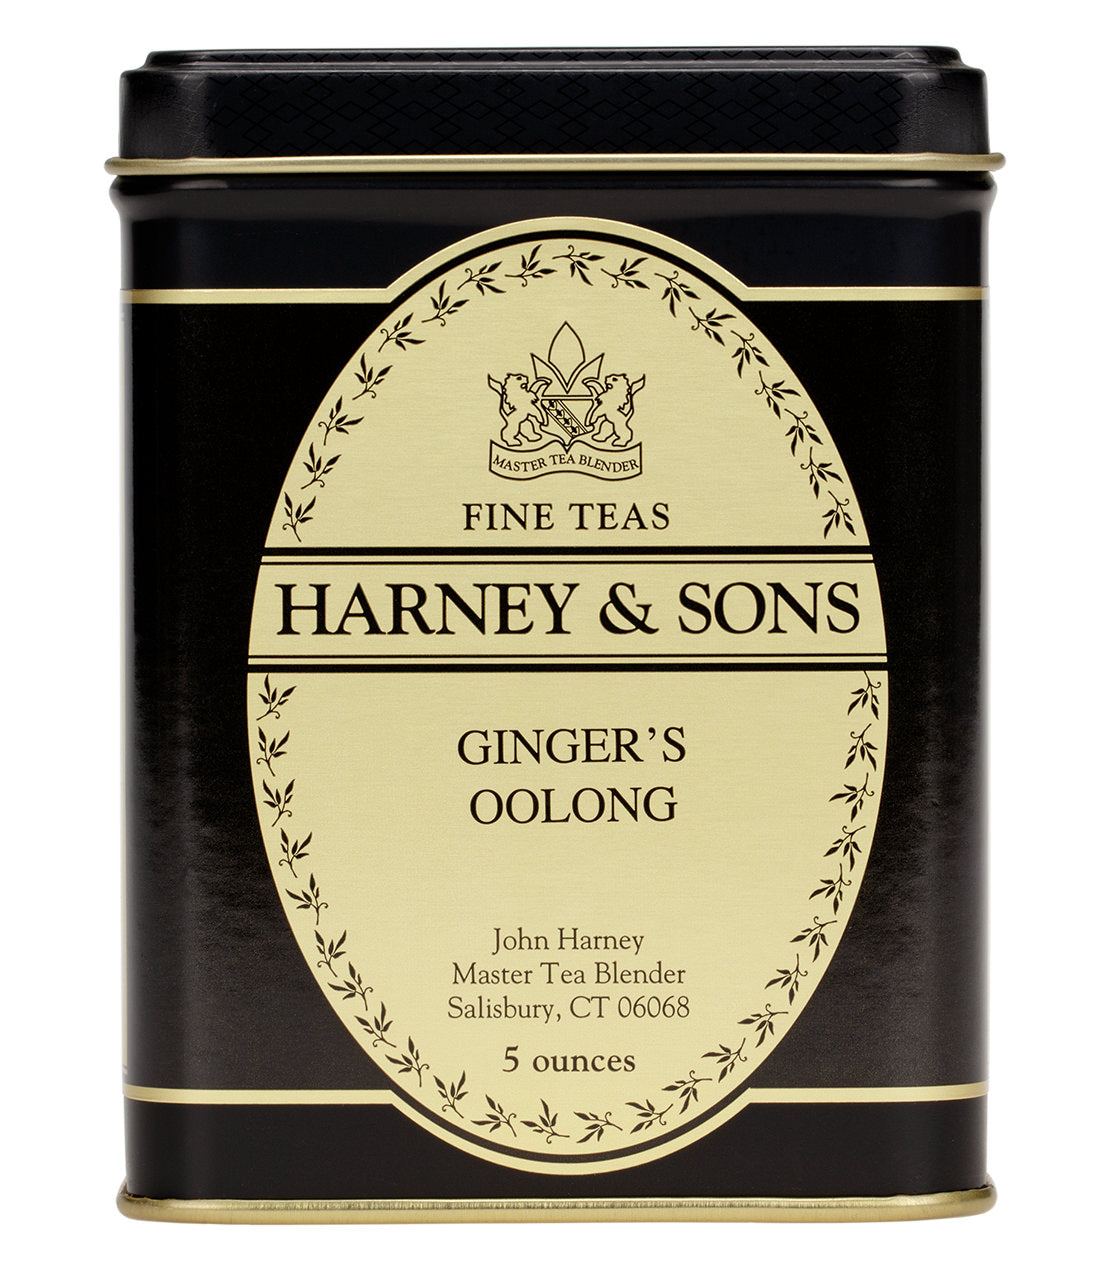 Ginger's Oolong - Loose 5 oz. Tin - Harney & Sons Fine Teas